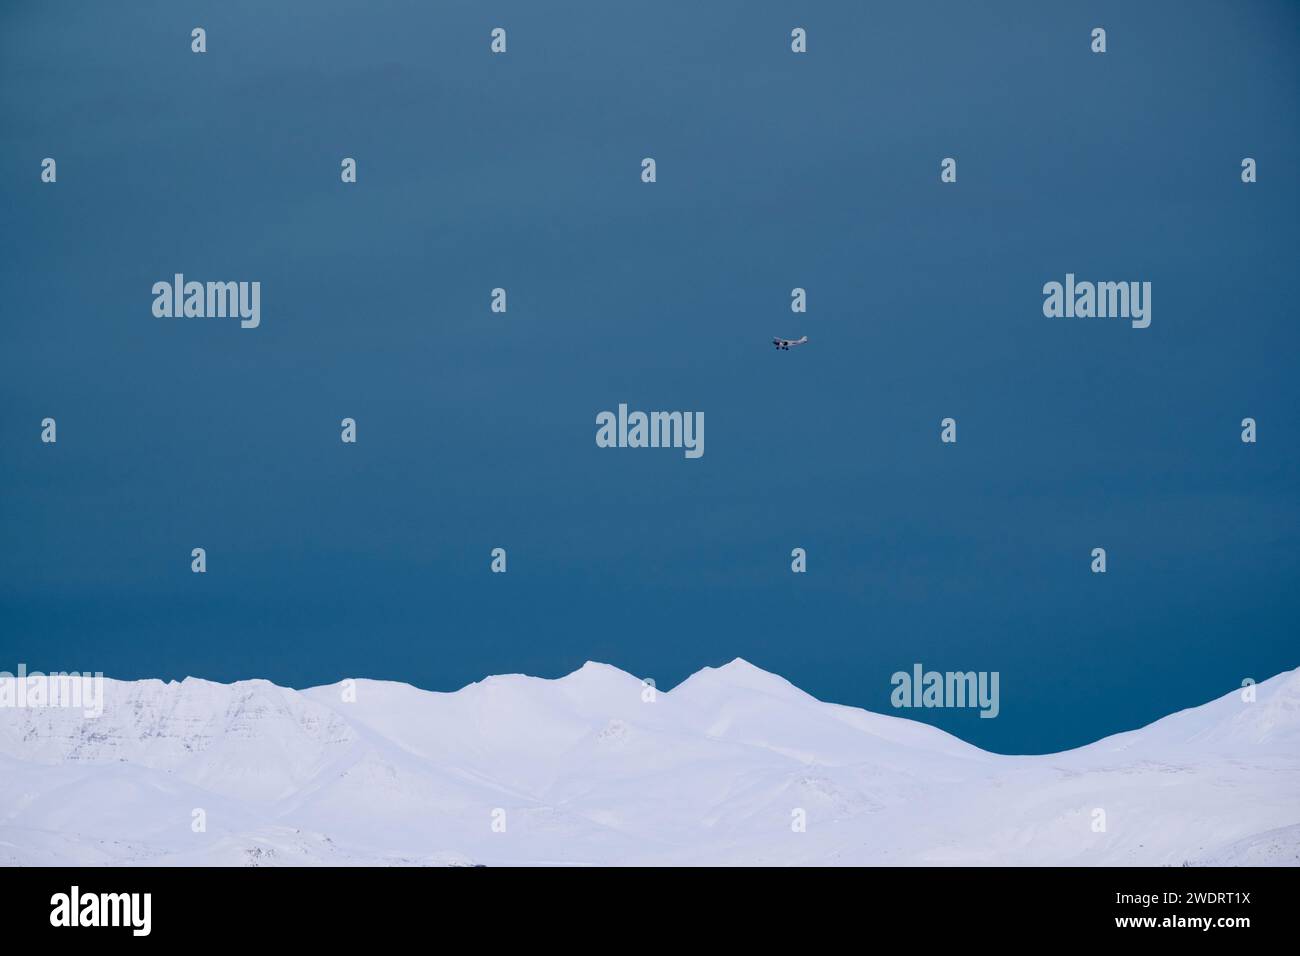 Bird flying over frozen snow landscape against blue sky in daylight Stock Photo